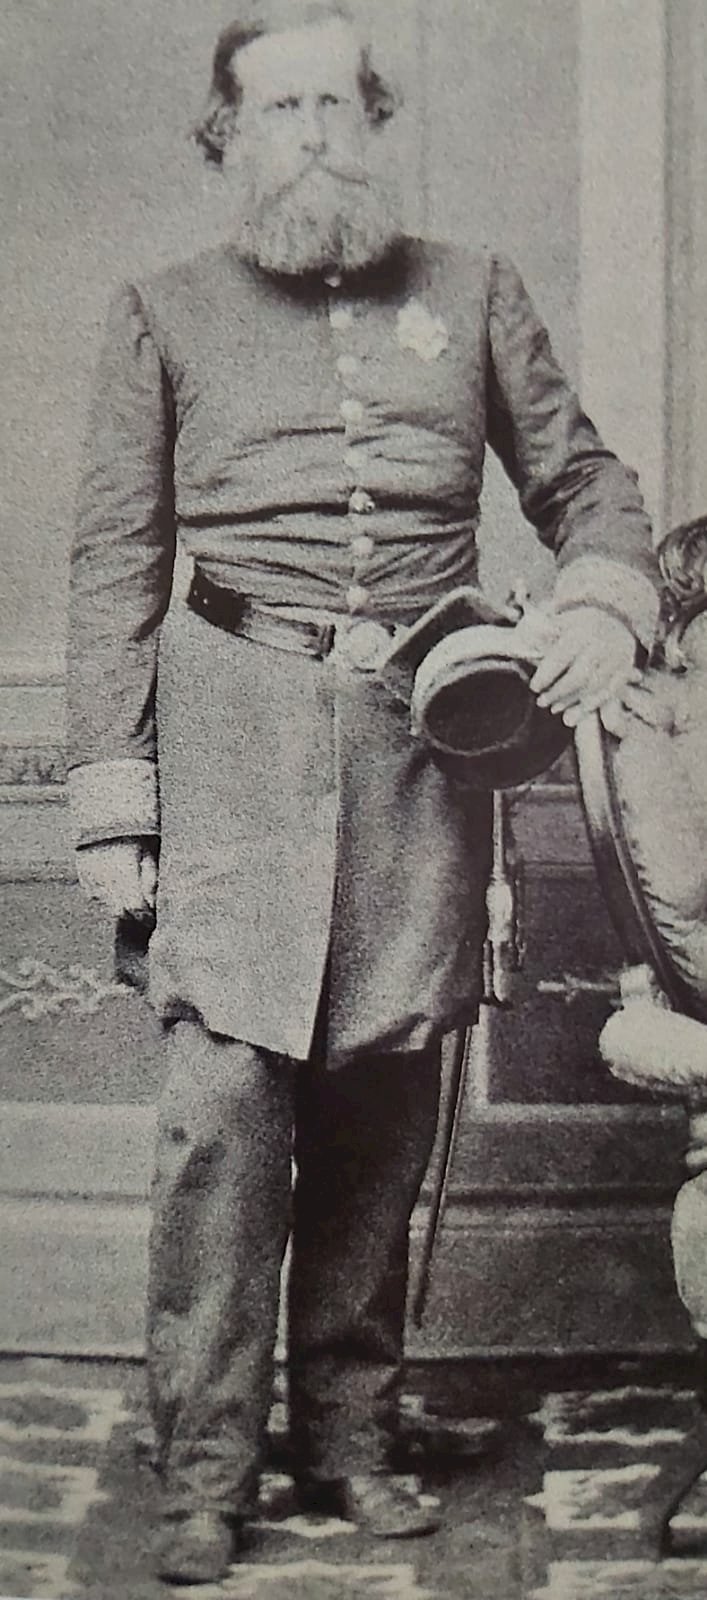 1865 - D. Pedro II em uniforme de General, durante a Guerra do Paraguai